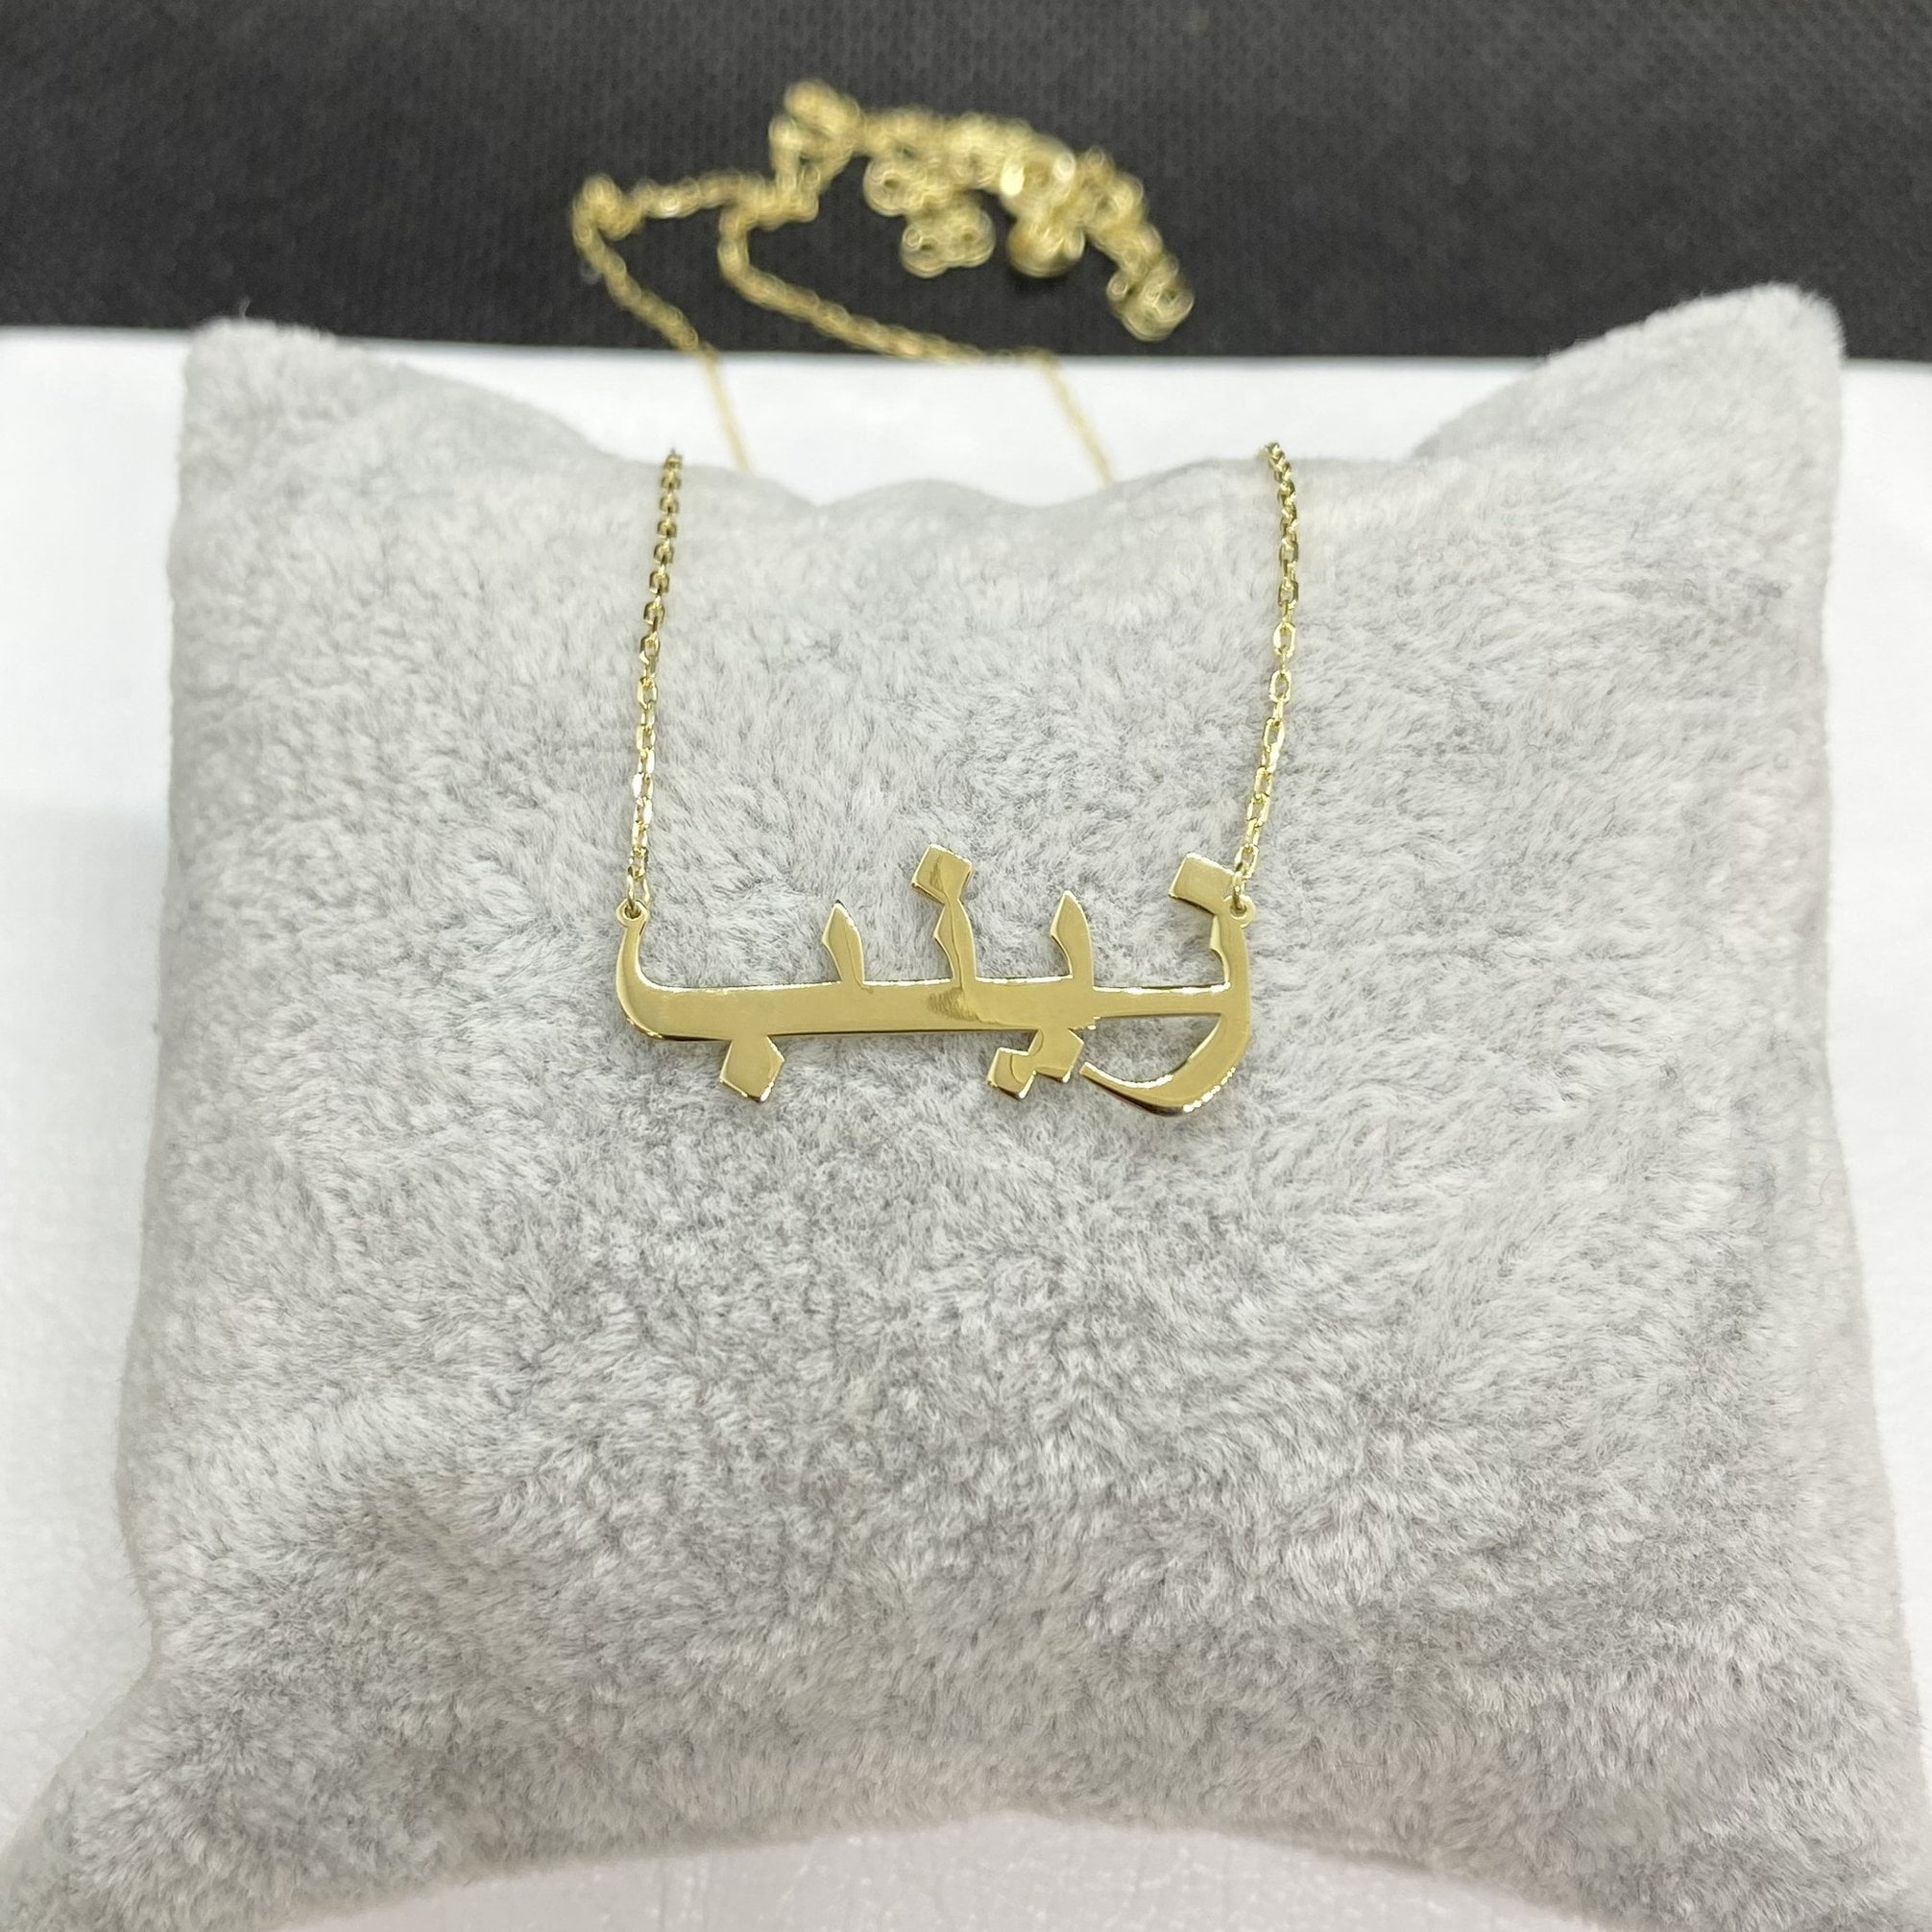 Gourmet Arabic Name Necklace in 18k Gold Vermeil - MYKA